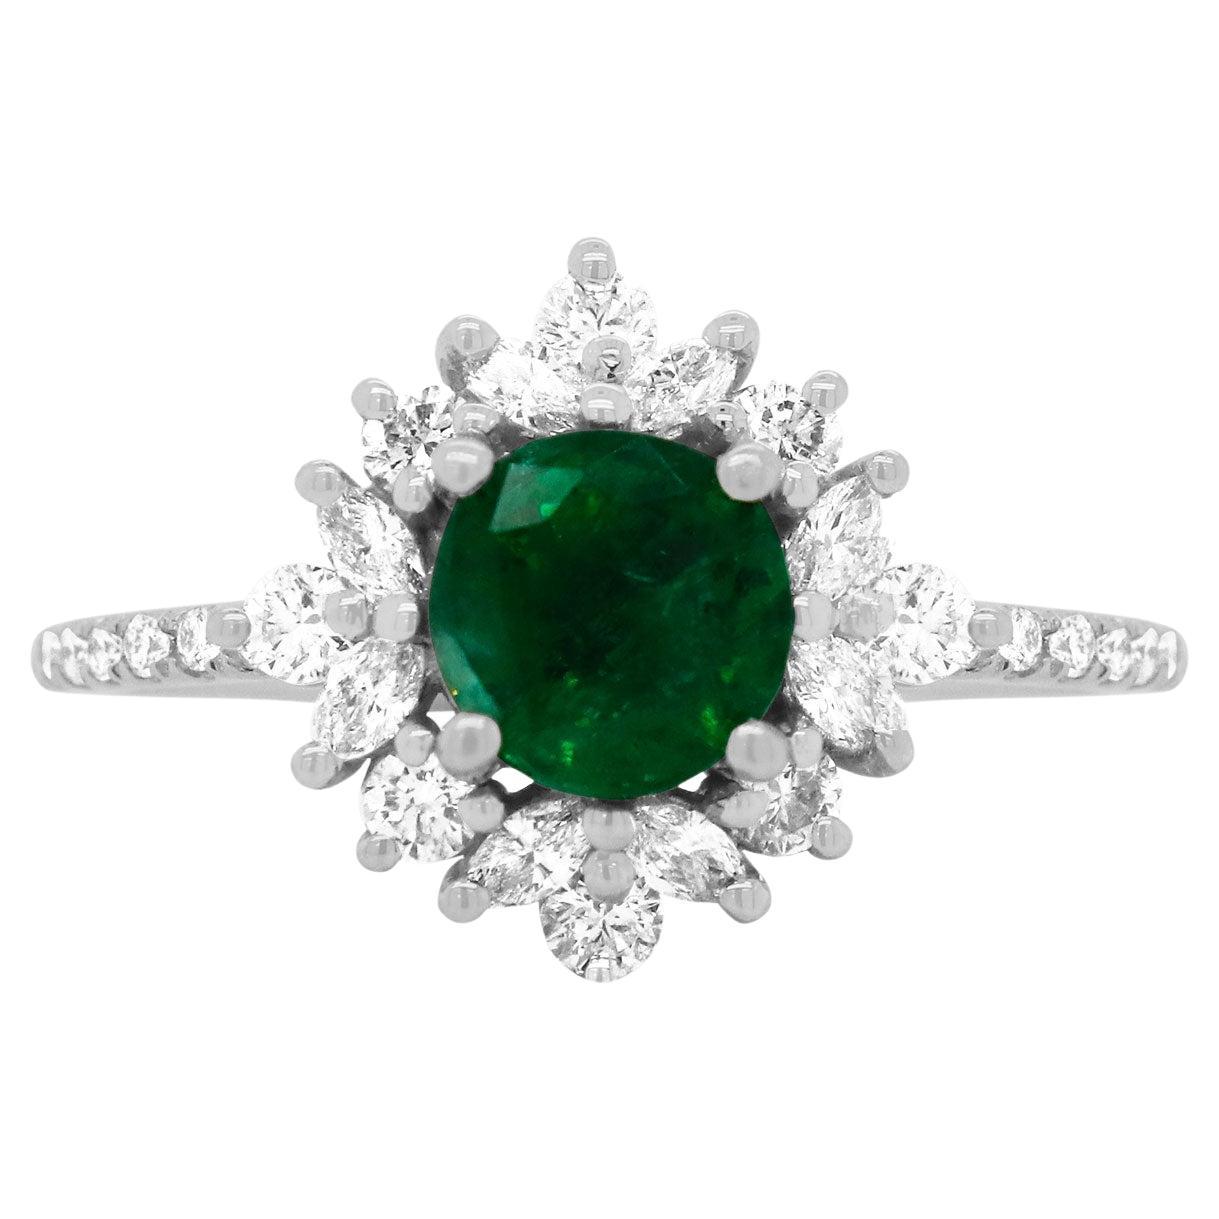 1.15 Carat Round Emerald White Diamond Halo Stone Elegant Ring 14k White Gold